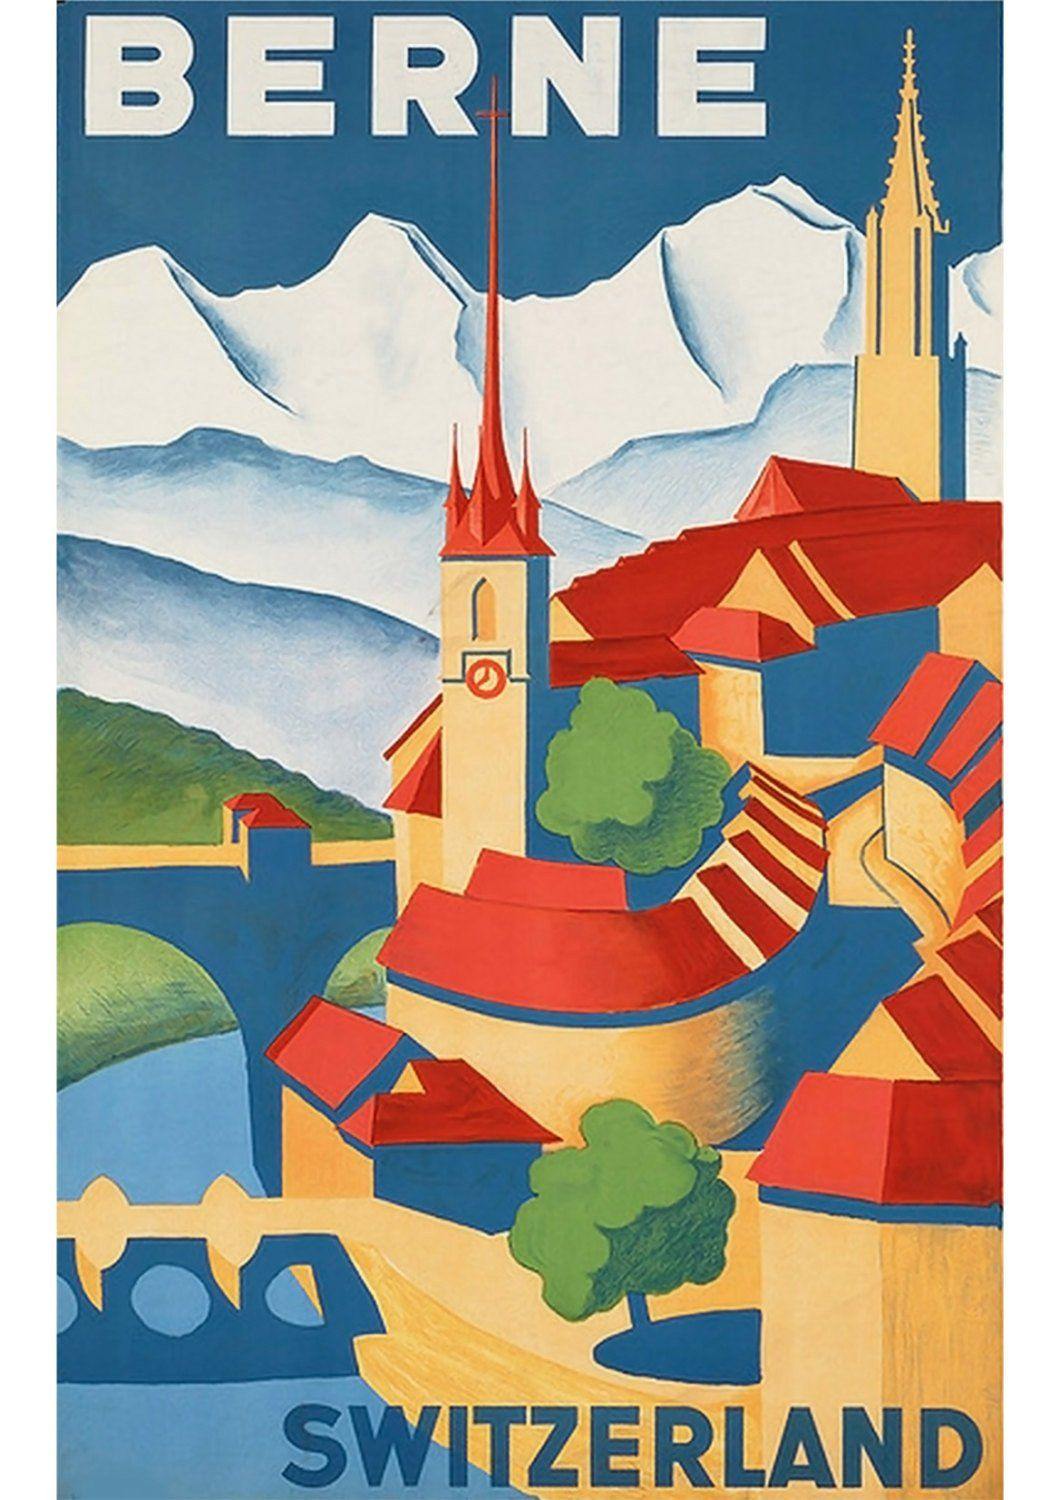 BERNE SWITZERLAND POSTER: Vintage Swiss Travel Advert - Pimlico Prints